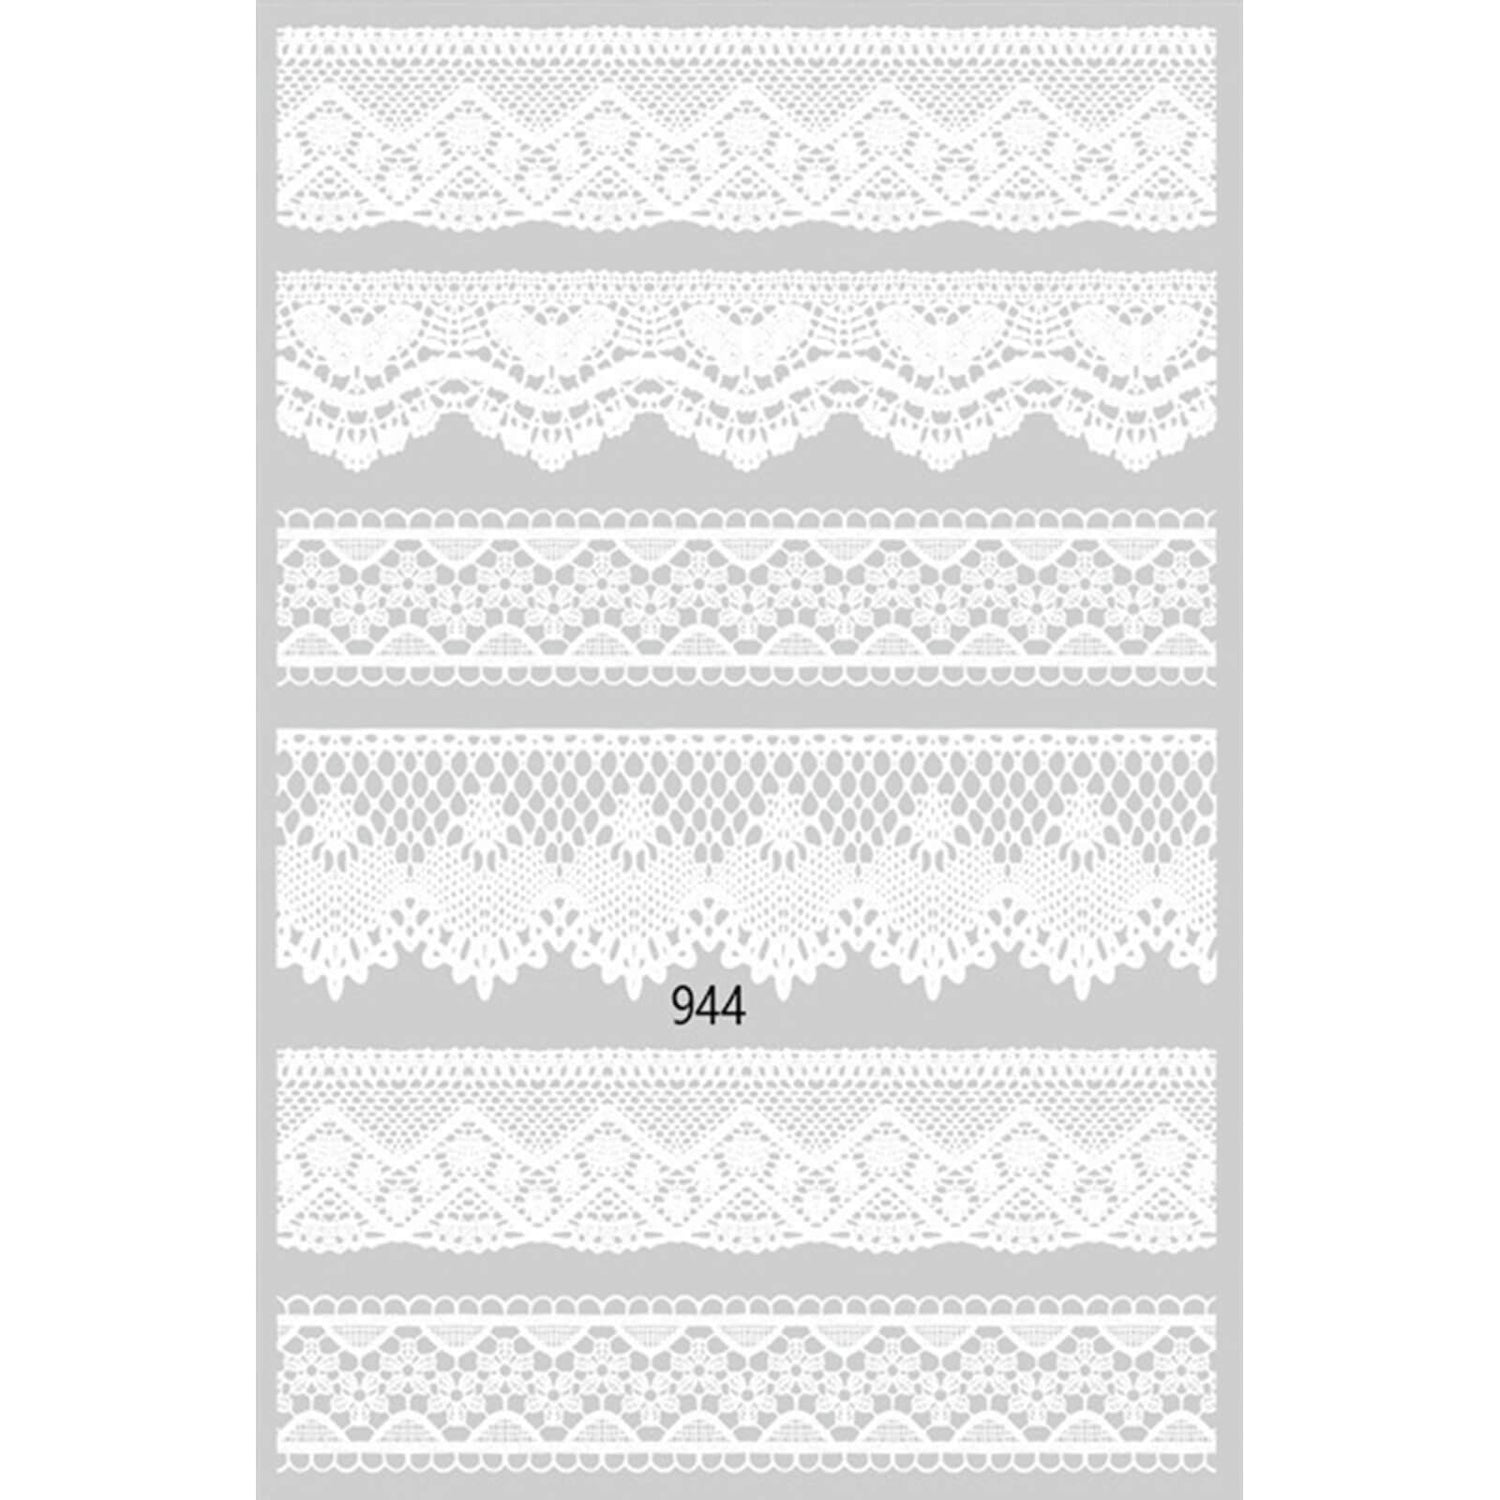 nail-art-stickers-lace-944-white